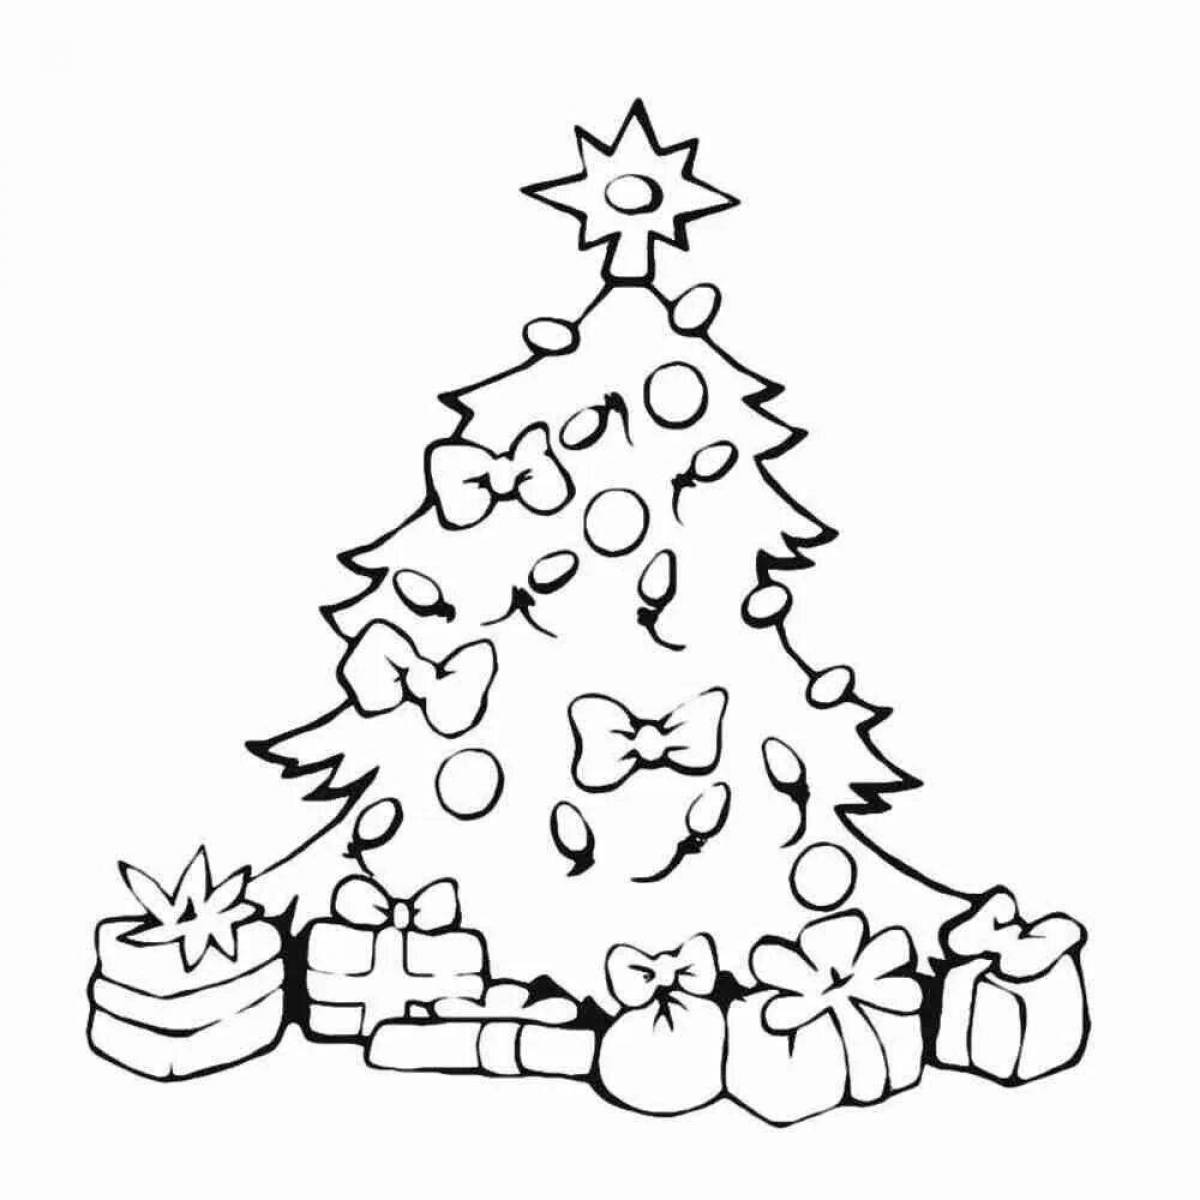 Glamorous Christmas tree coloring page